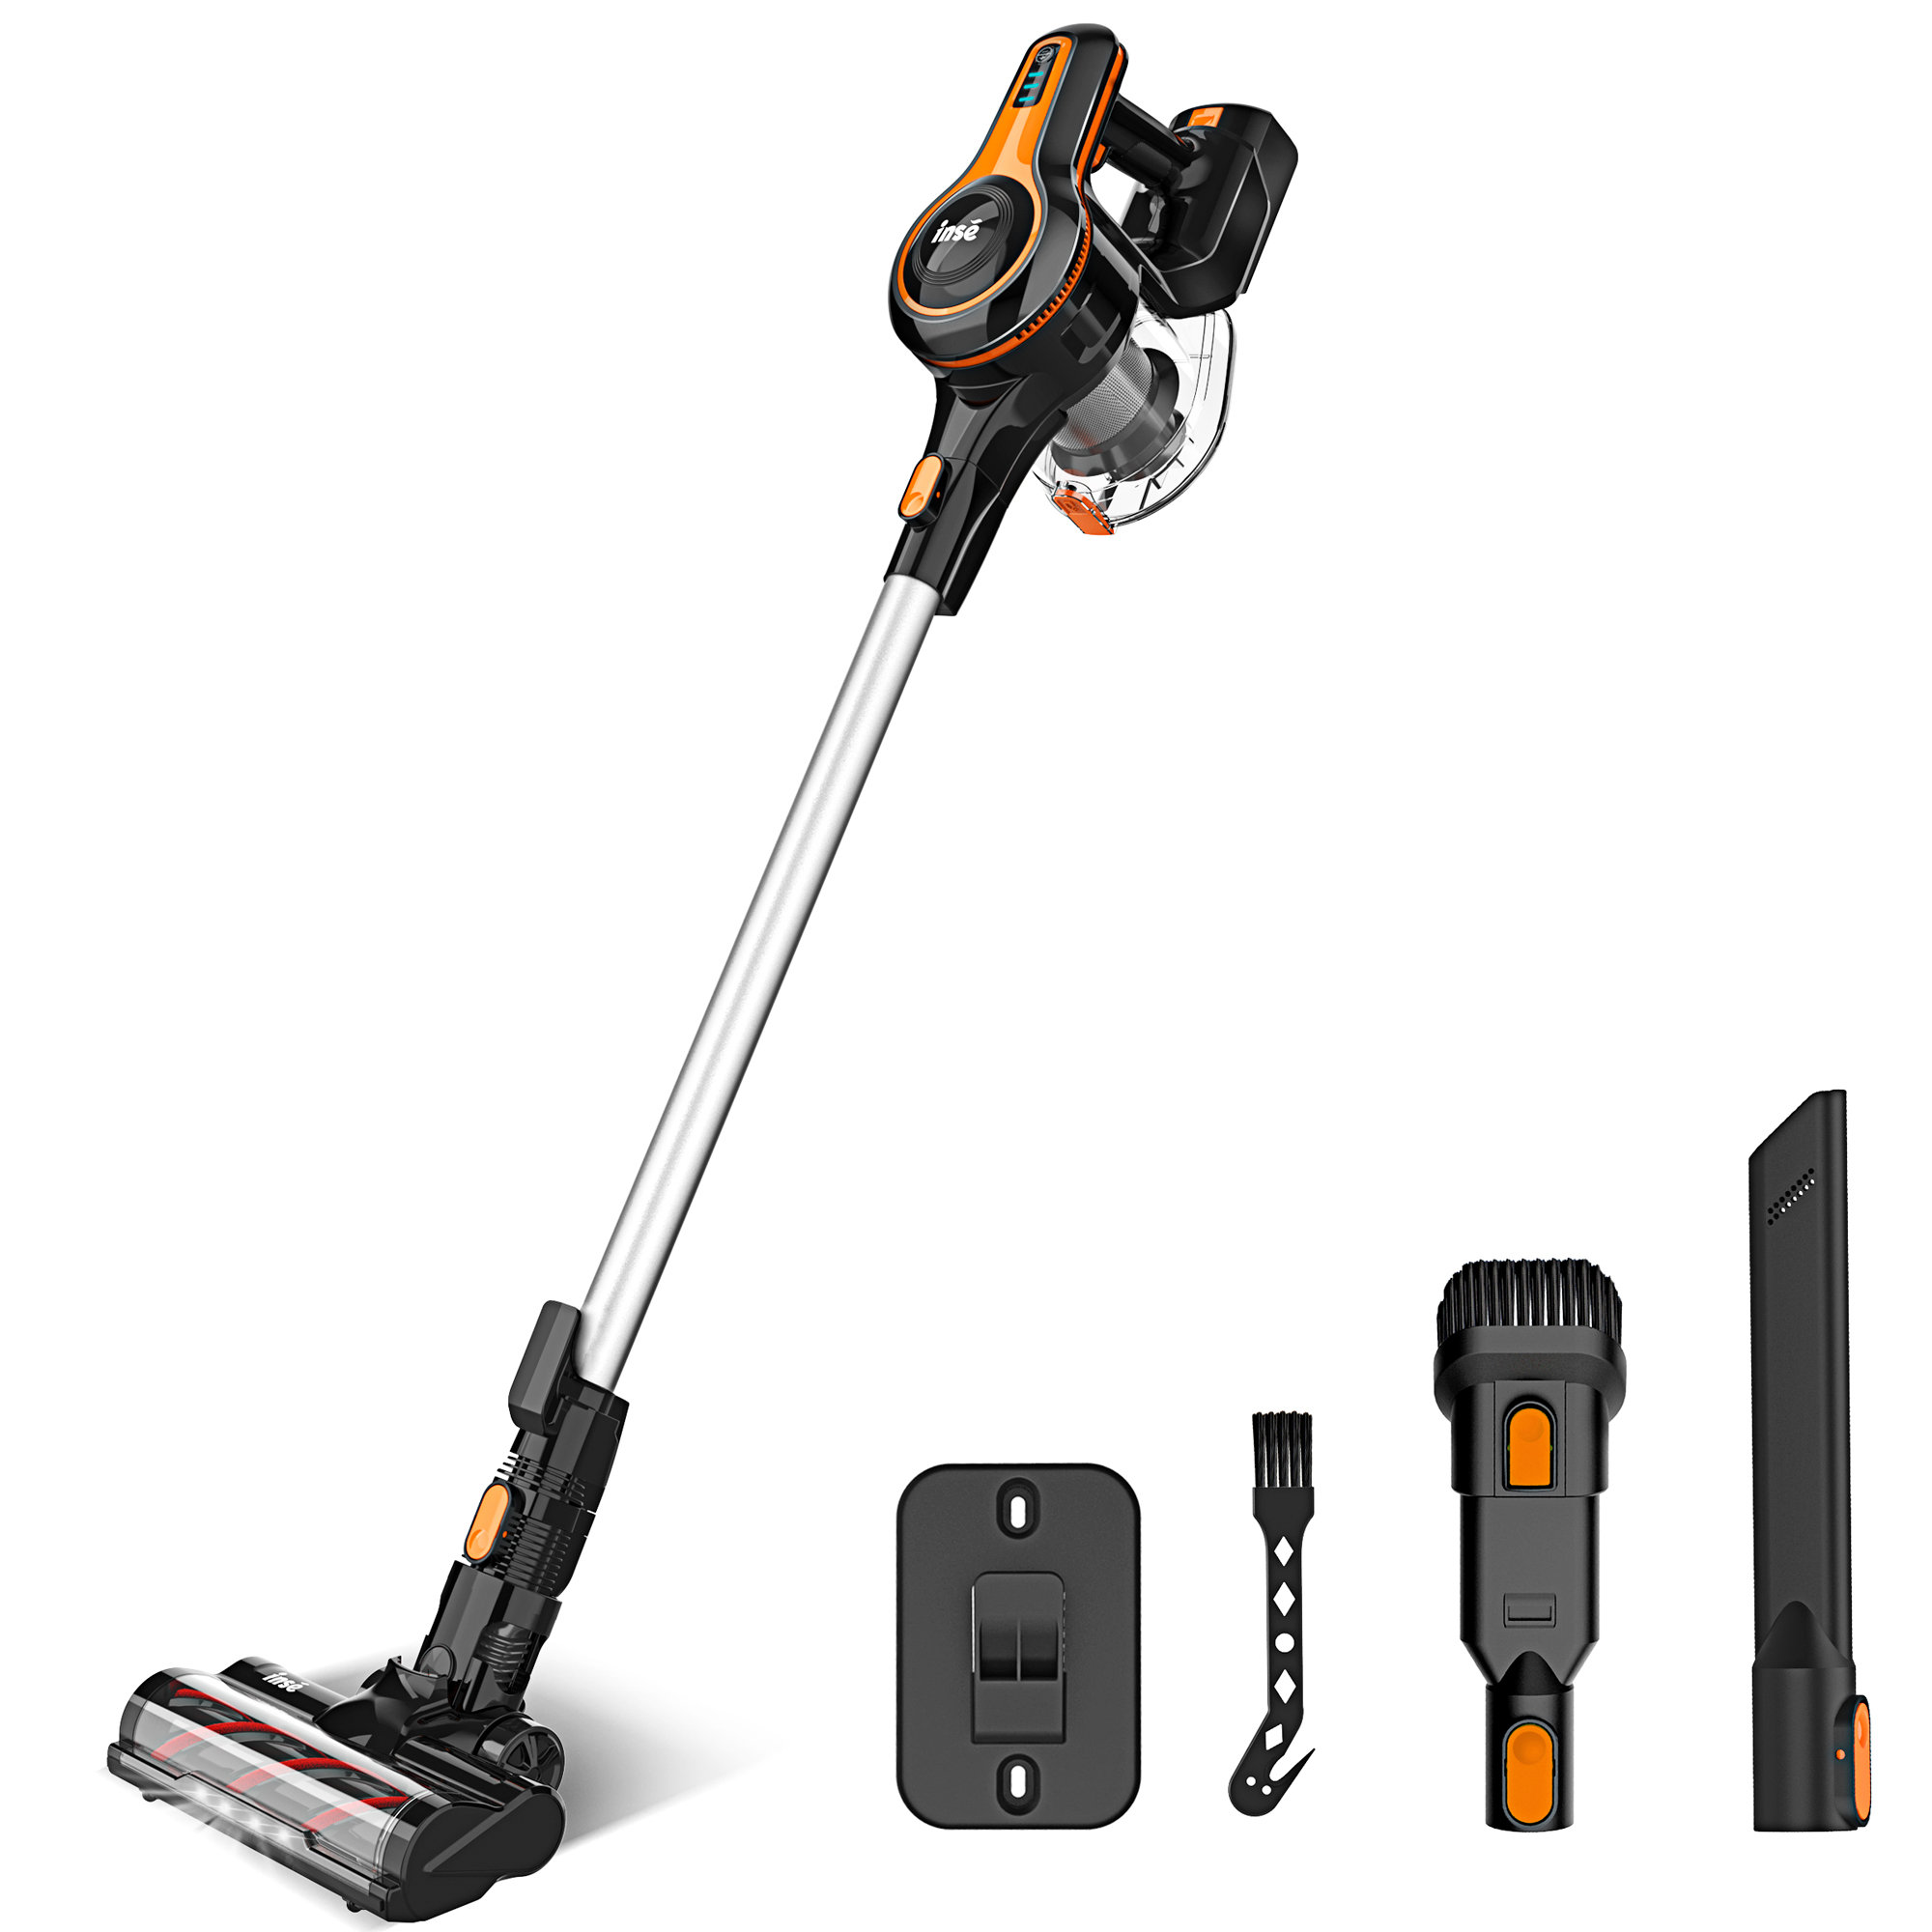 INSE Cordless Vacuum Cleaner,25Kpa Powerful Stick Vacuum,6-in-1